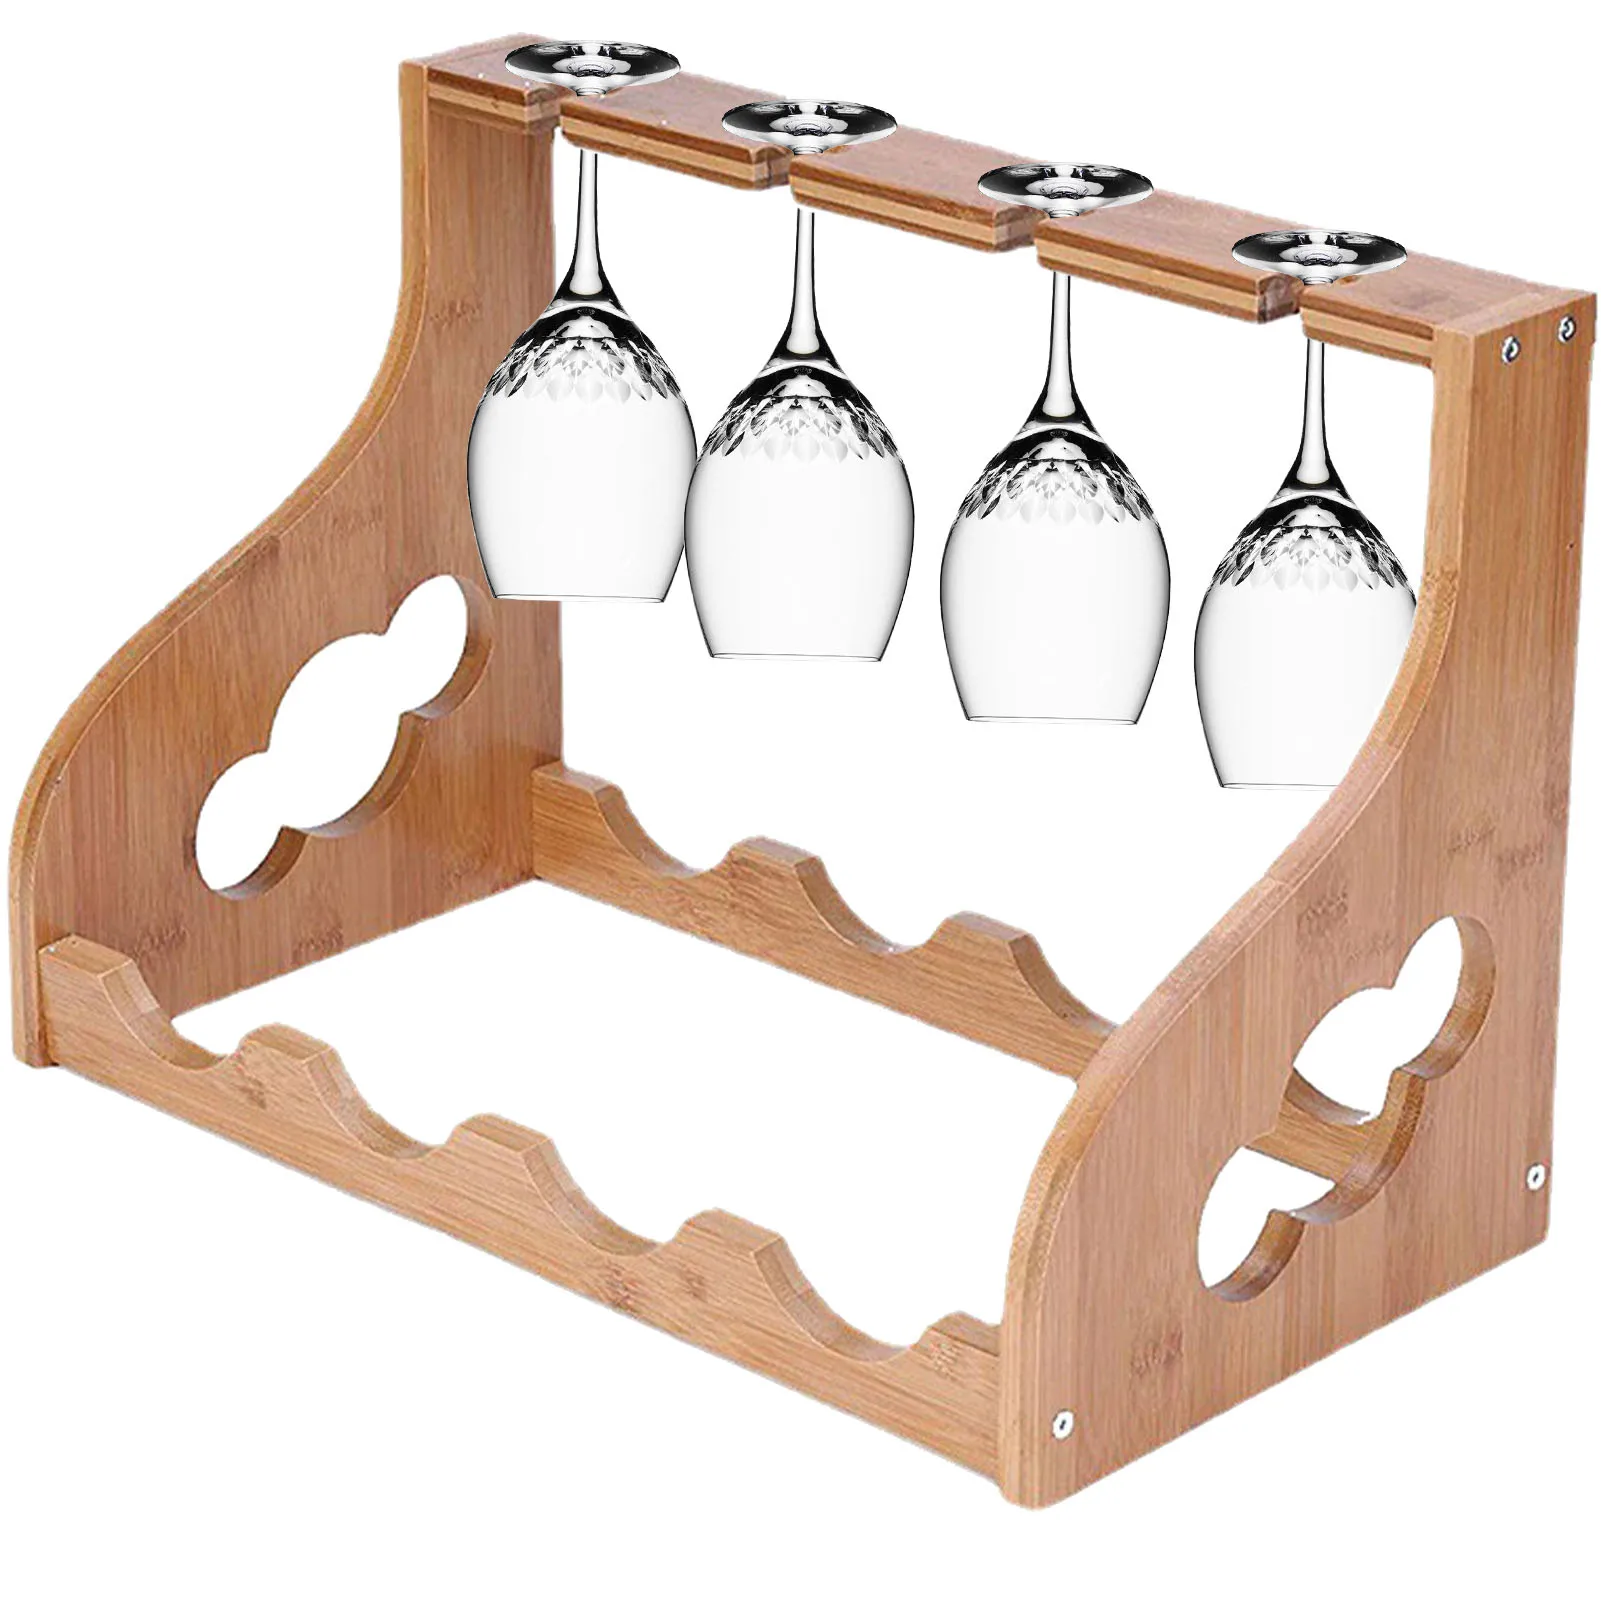 https://ae01.alicdn.com/kf/S2515d2dcc7444507a1decc39f03666b5y/High-Quality-Useful-Wooden-Wine-Glass-Rack-Hanger-Shelf-Free-Standing-Countertop-Cabinet-Holder-Kitchen-Bar.jpg